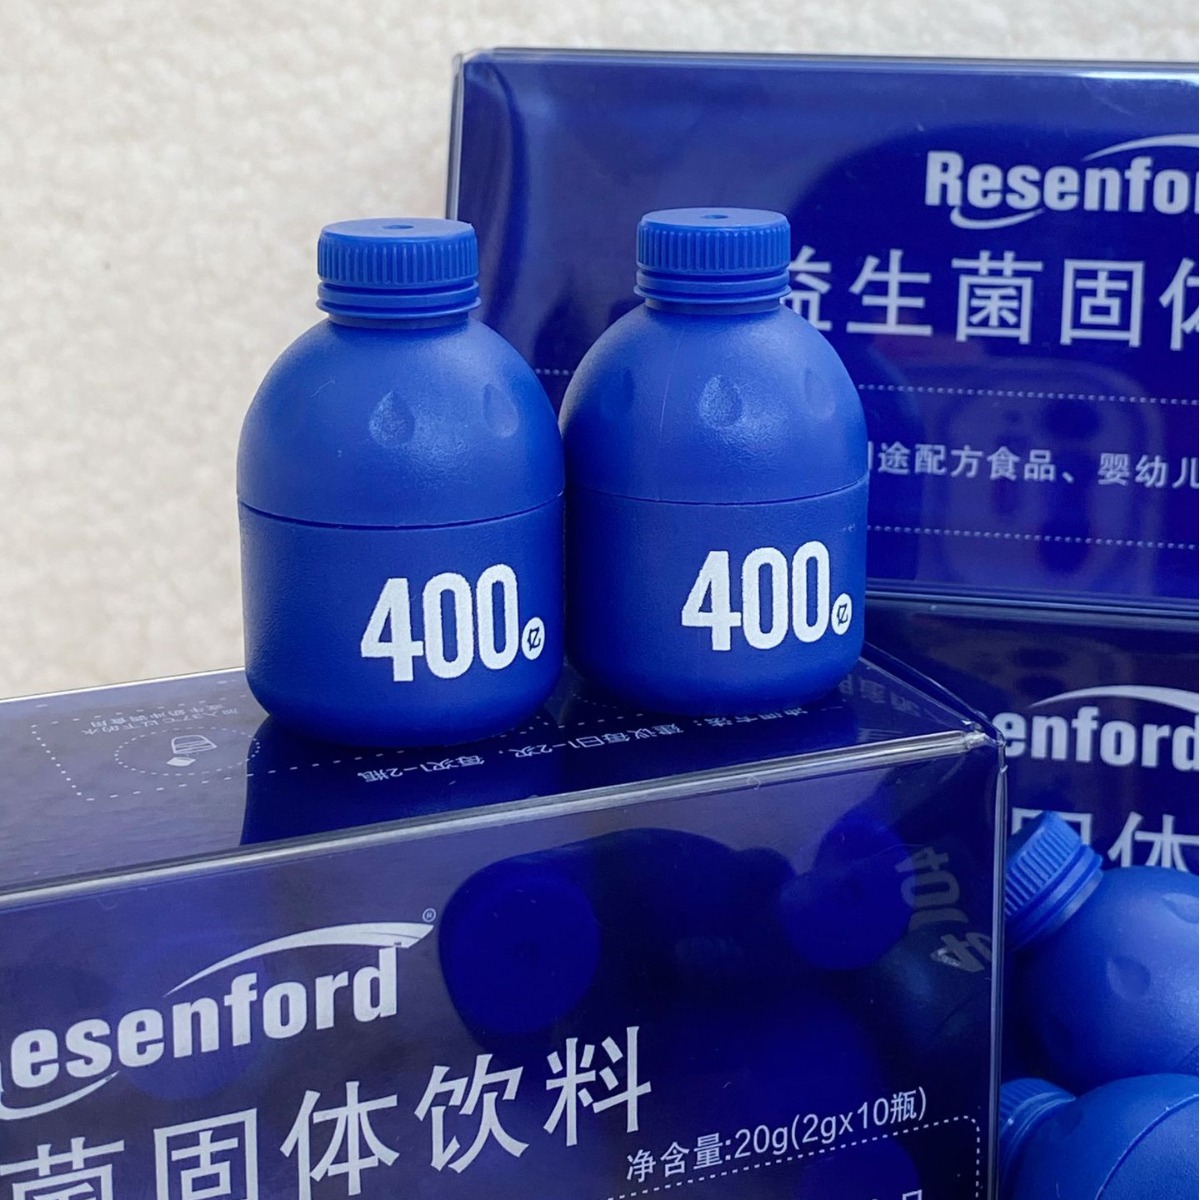 Resenford复合益生菌粉小蓝瓶成人儿童肠道益生元固体饮料